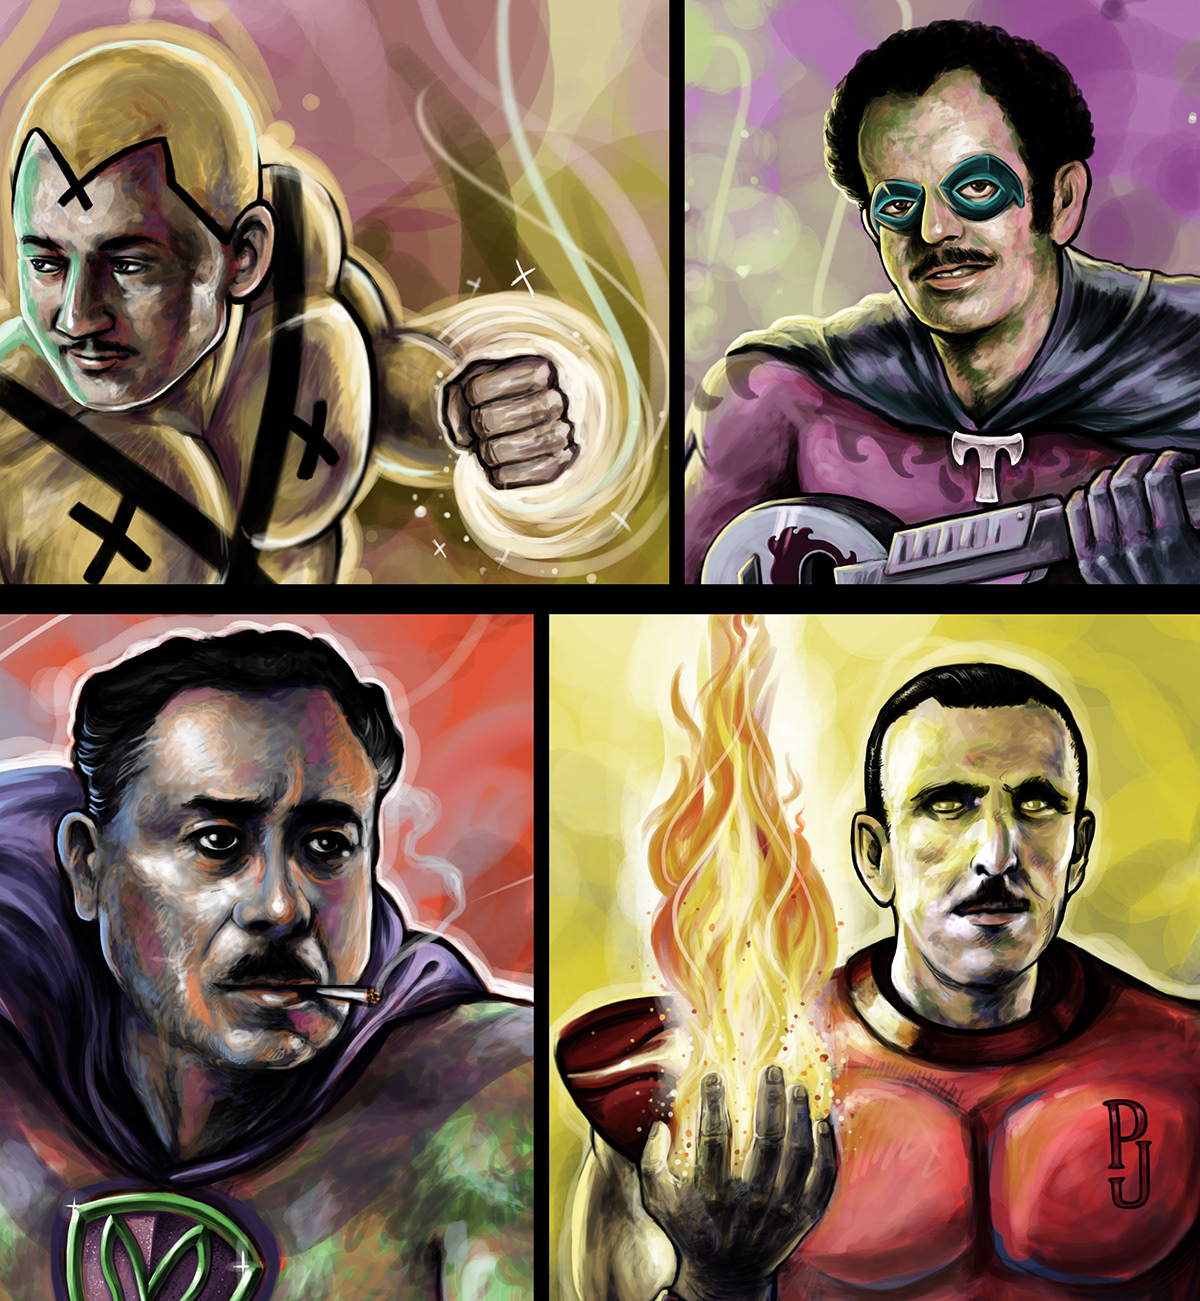 rebetiko super Hero heroes Rembetiko Paris ksintarianos bouzouki powers power comic comics xintarianos Chios